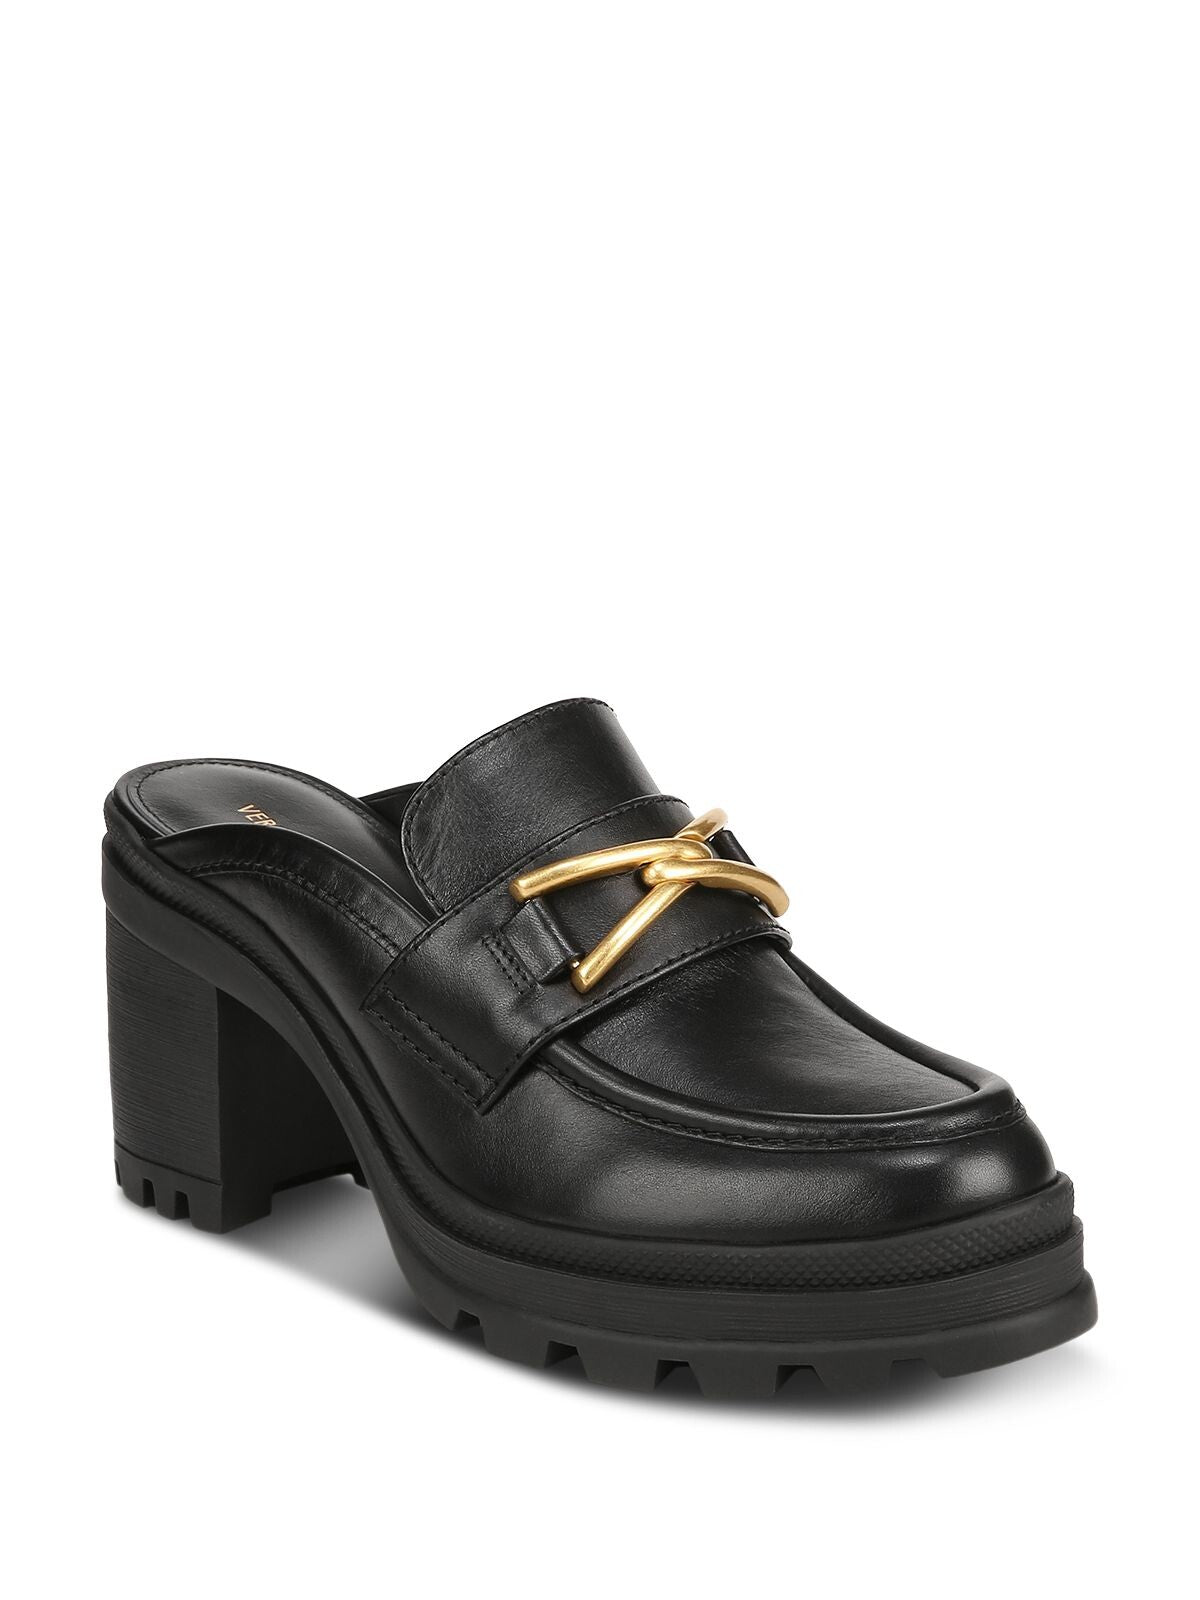 VERONICA BEARD Womens Black 1" Platform Metallic Hardware Padded Wynter Round Toe Block Heel Slip On Leather Heeled Mules Shoes 8 M